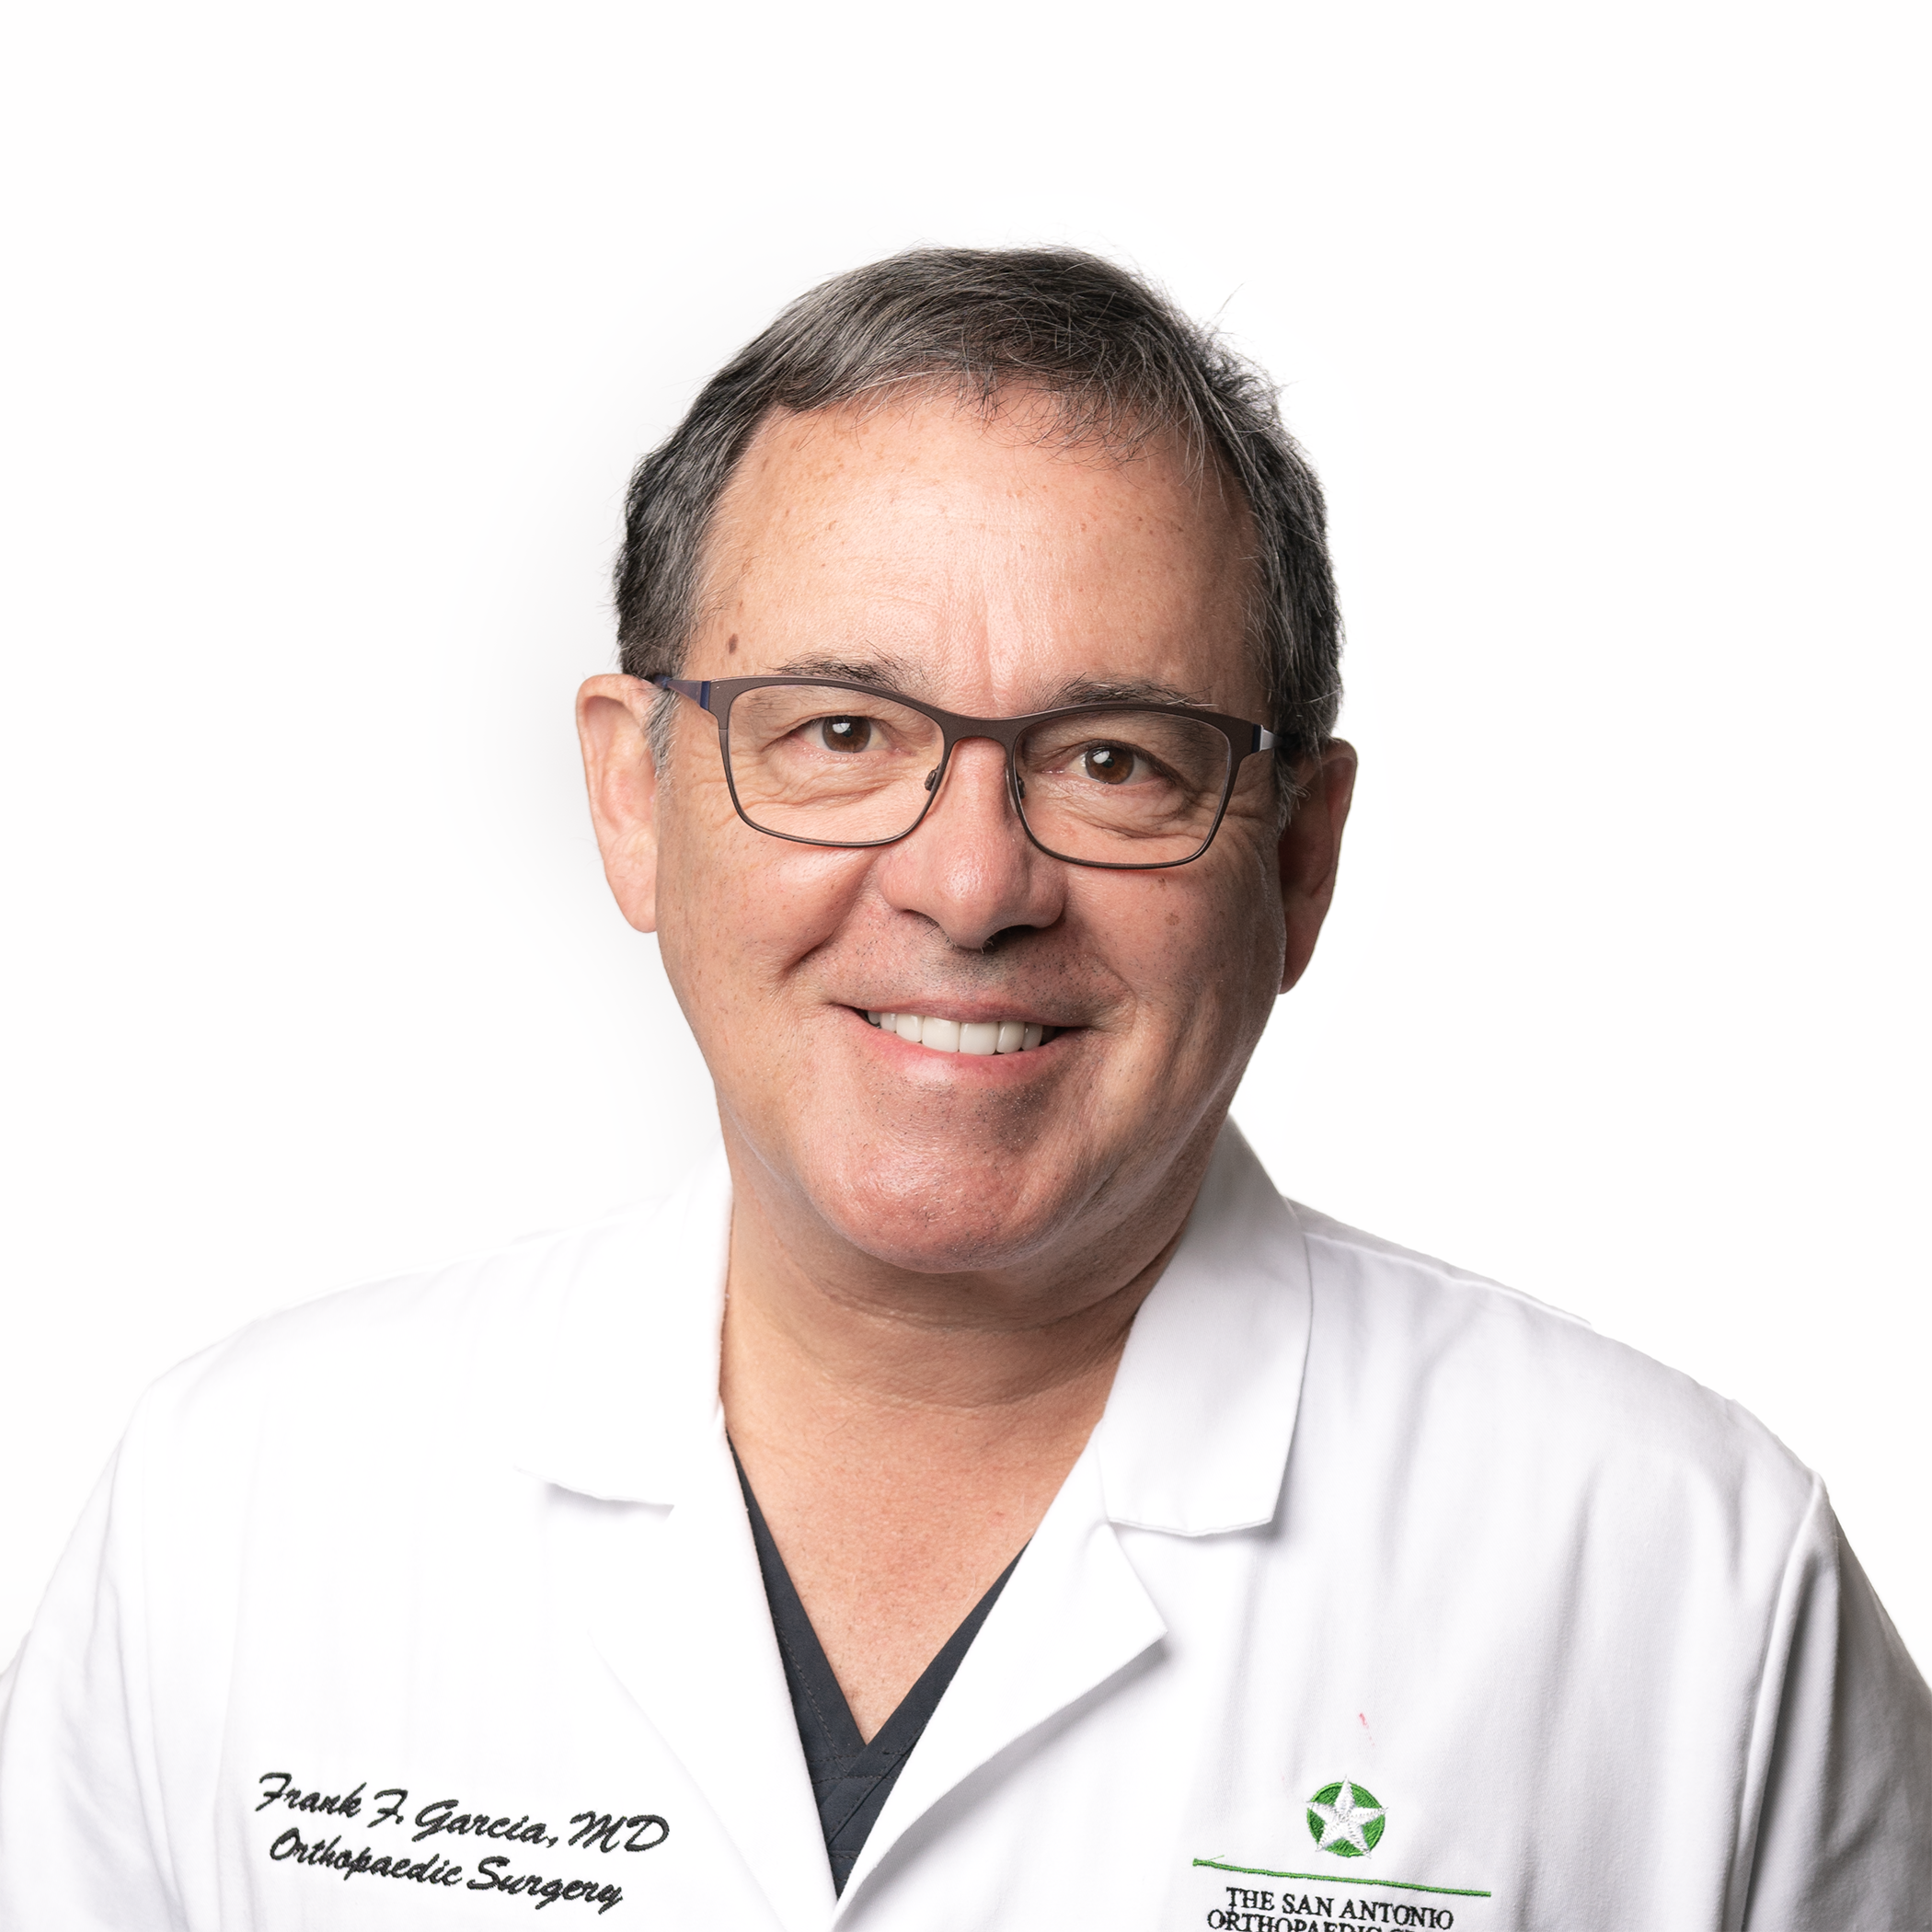 Dr. Frank Garcia